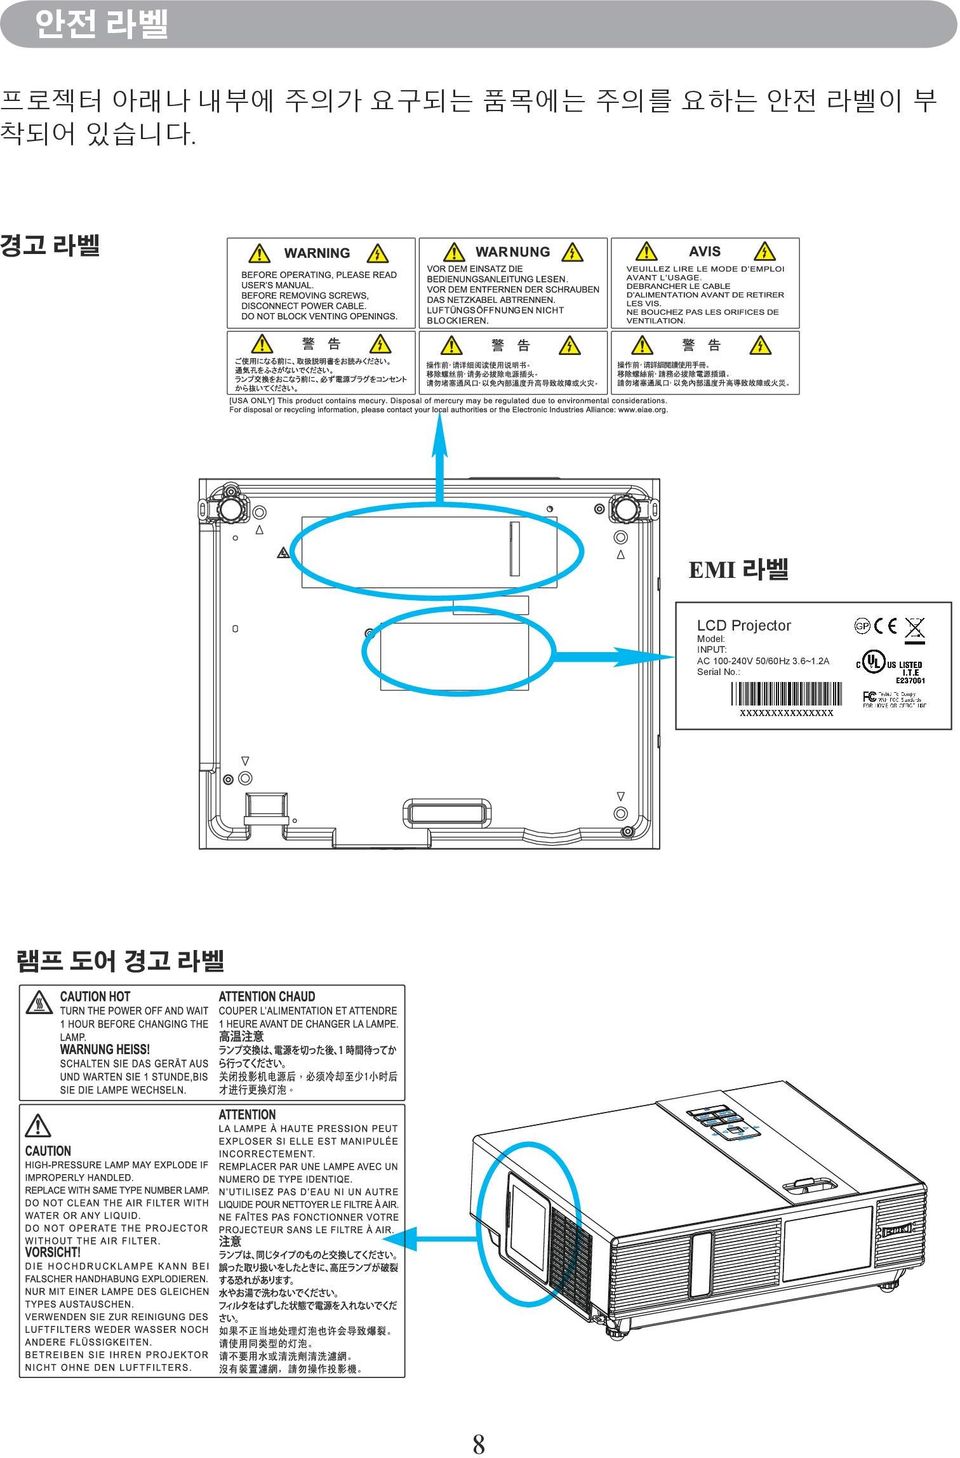 LCD Projector Model: INPUT: AC